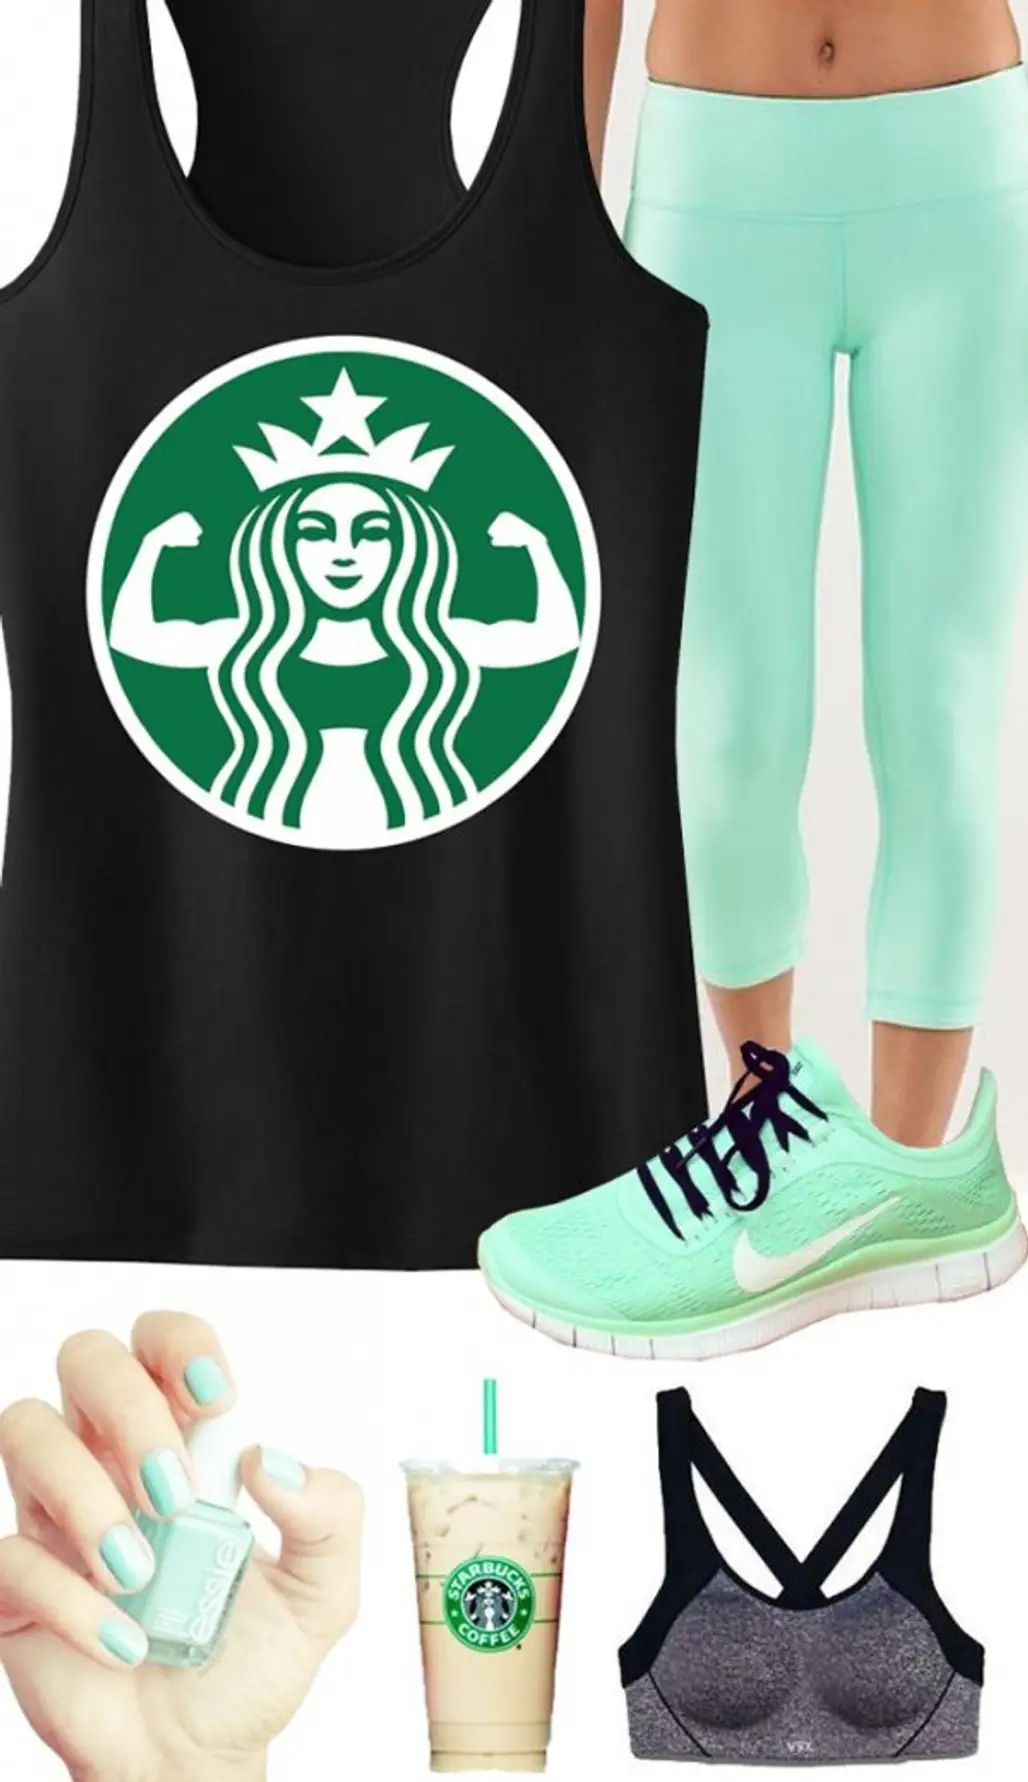 Starbucks,clothing,green,product,brand,